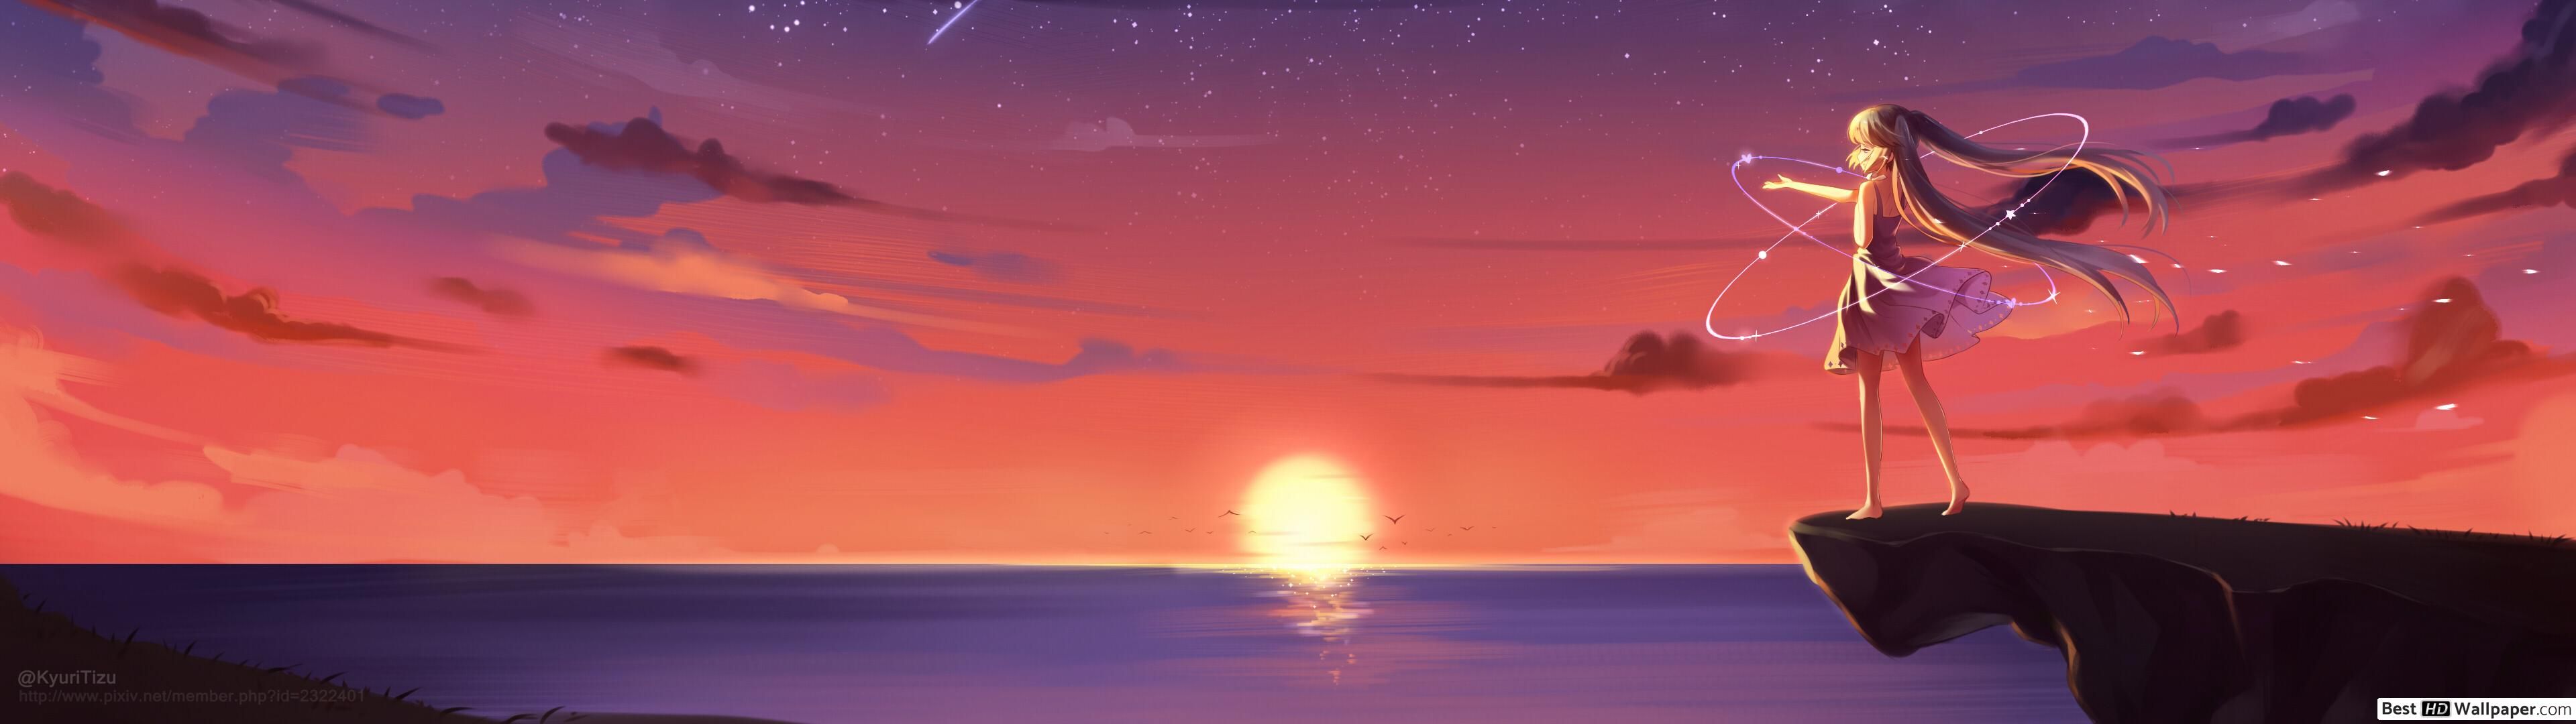 Anime sunset art HD wallpaper download